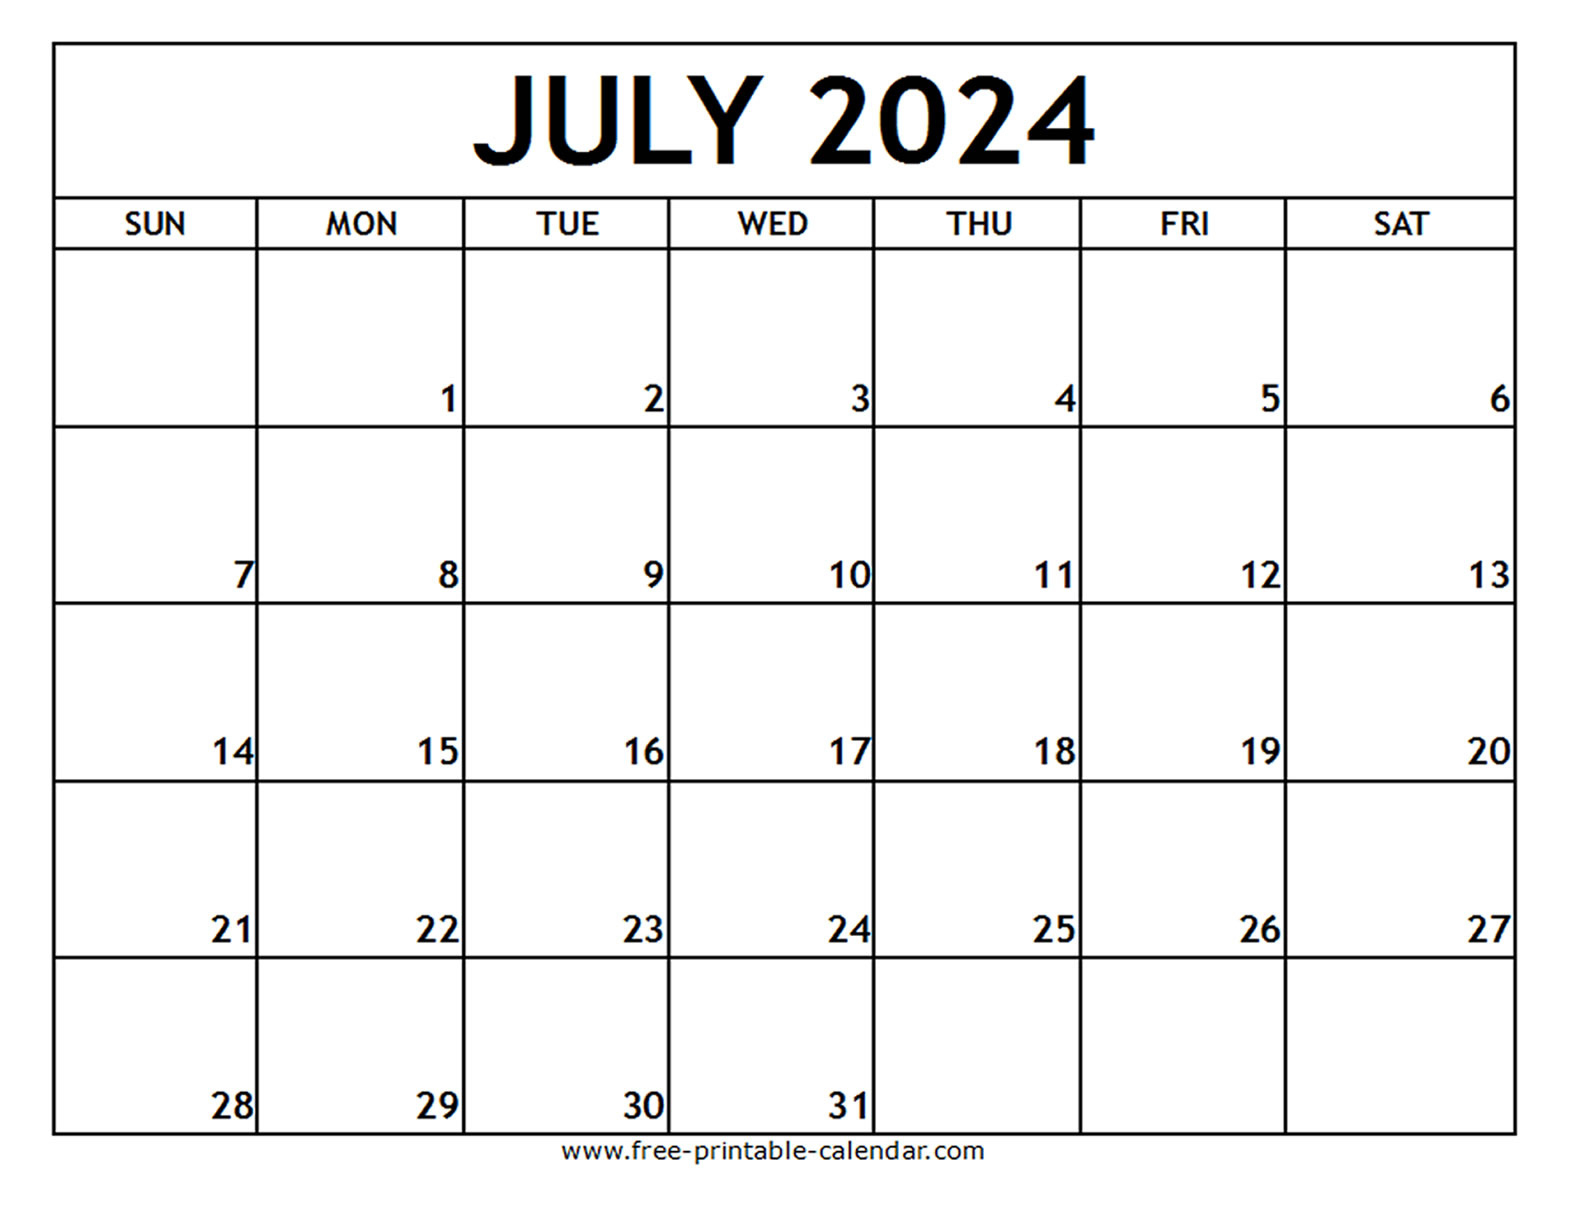 July 2024 Printable Calendar - Free-Printable-Calendar in July Calendar Print Out 2024